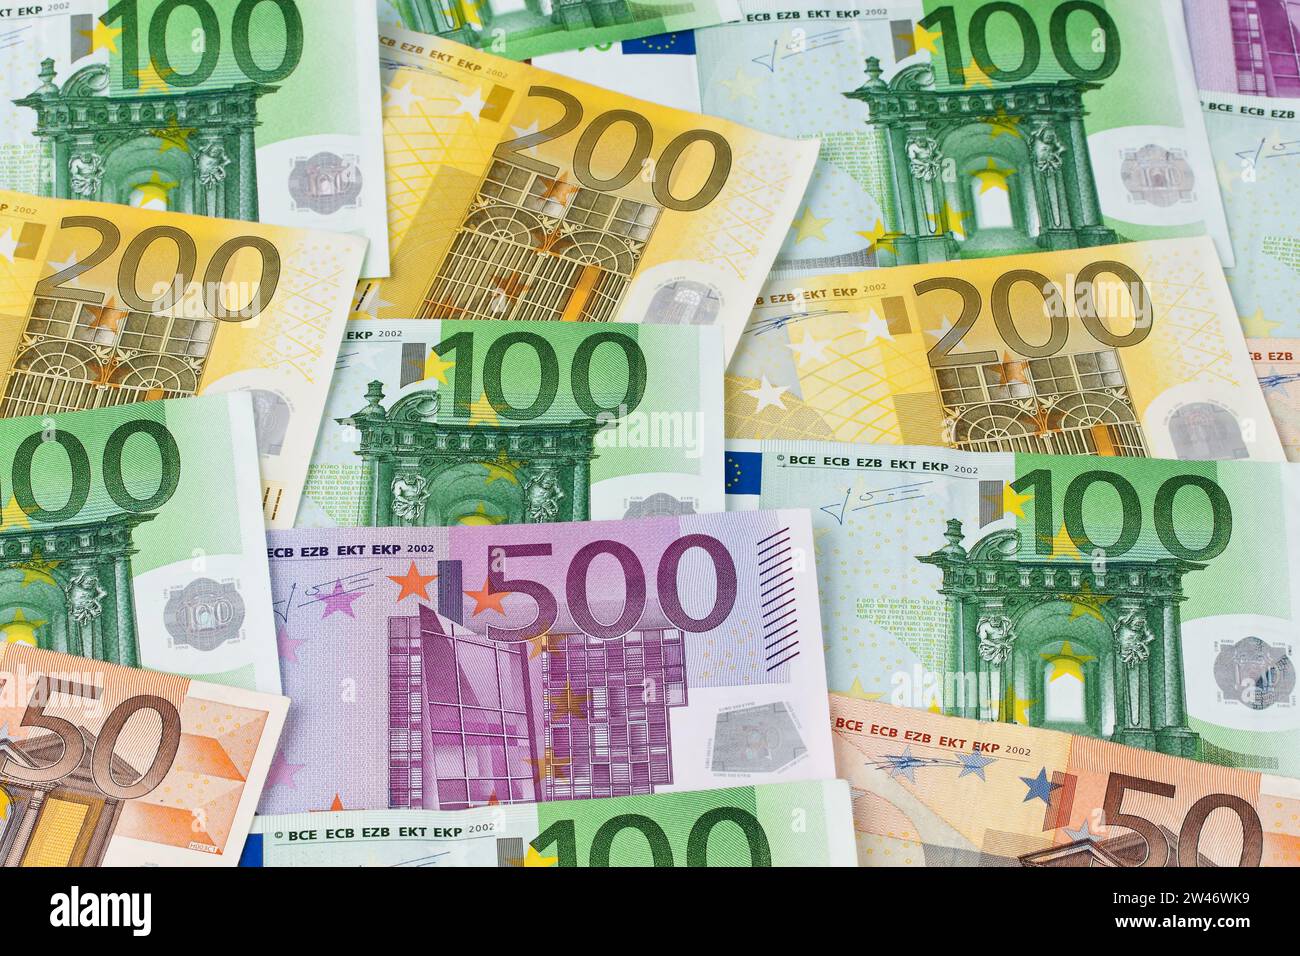 Verschiedene Euro-Banknoten, Euro, Euros, geldscheine, Euroscheine, 50, 100, 200, 500, 50er, 100er, 200er, 500er, Eurobanknoten, Geldscheine, Stock Photo